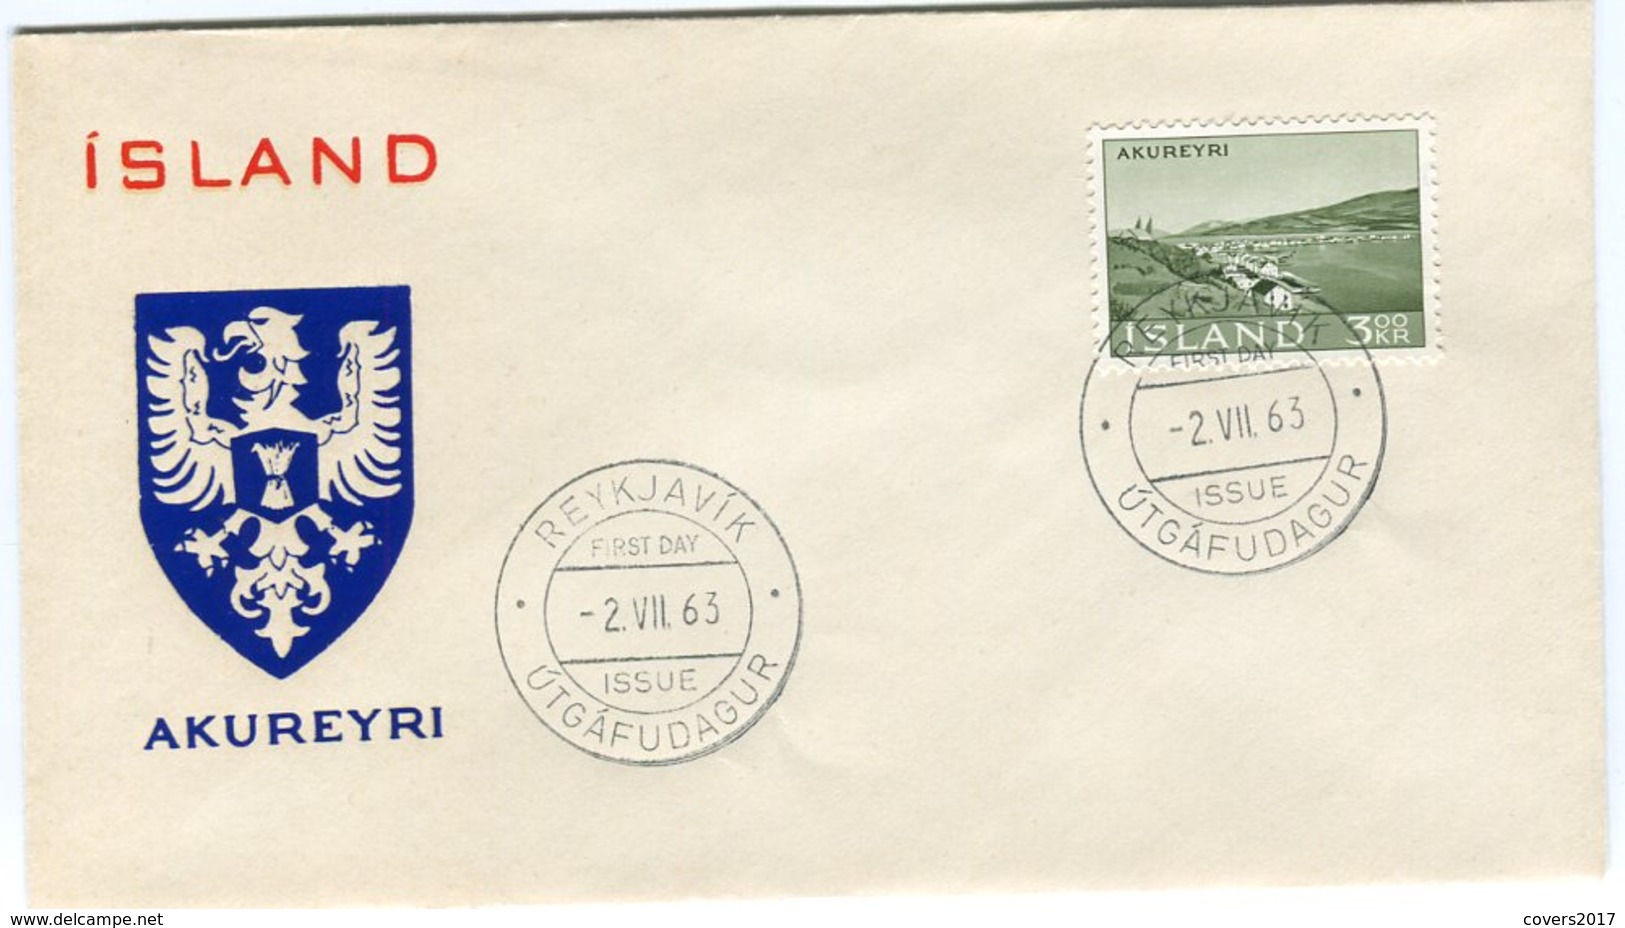 Iceland/Islande/Ijsland/Island FDC 2.VII.1963 Akureyri Matching Cover - FDC